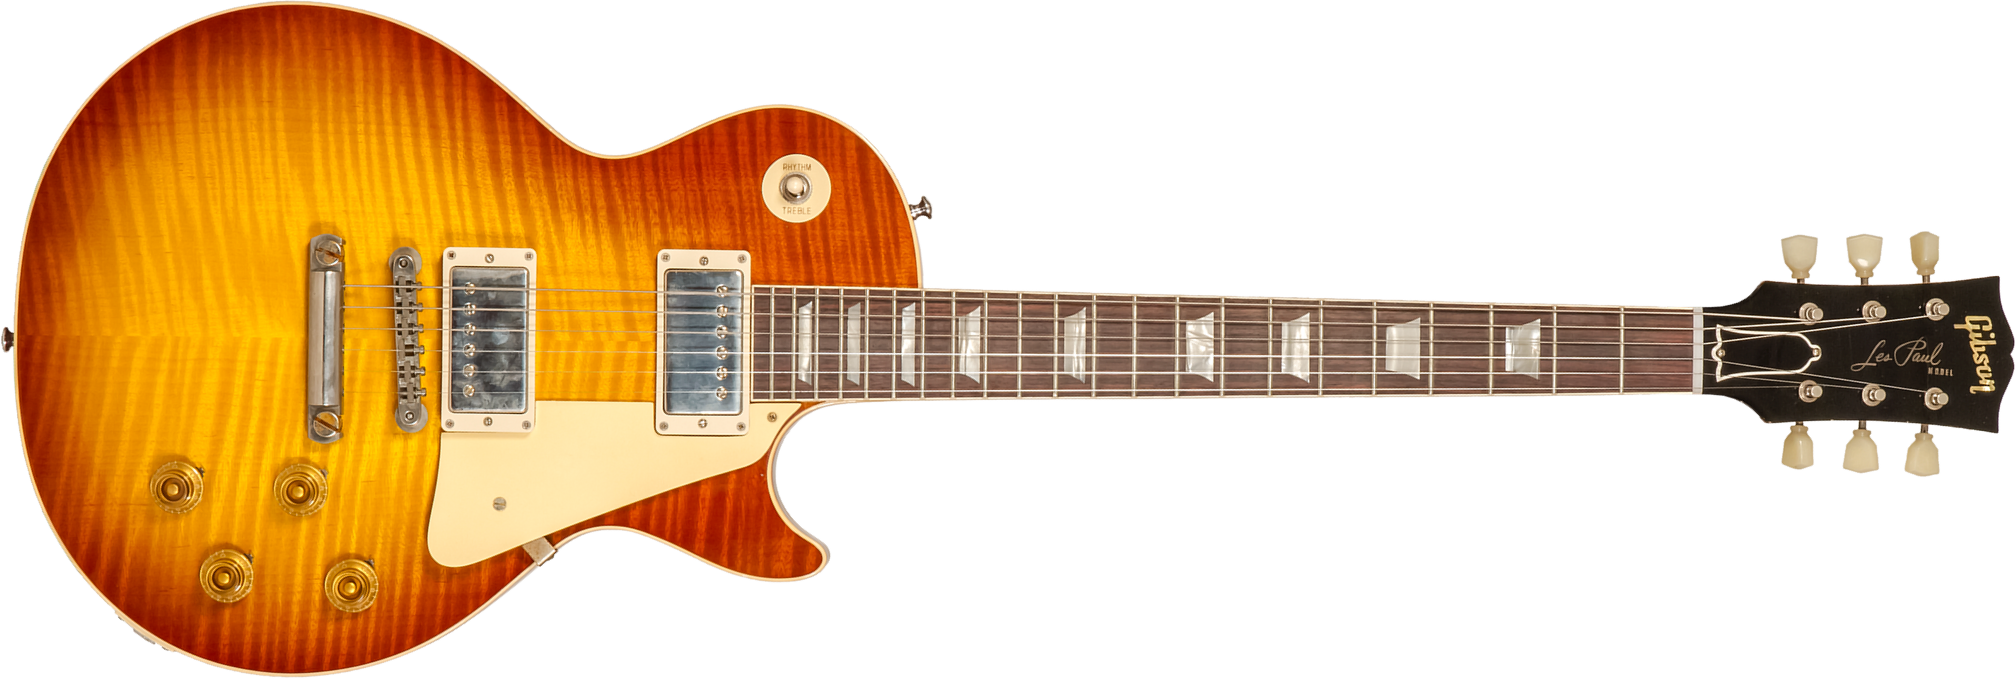 Gibson Custom Shop M2m Les Paul Standard 1959 Reissue 2h Ht Rw #934287 - Murphy Lab Ultra Light Aged Ice Tea Burst - Single cut electric guitar - Main